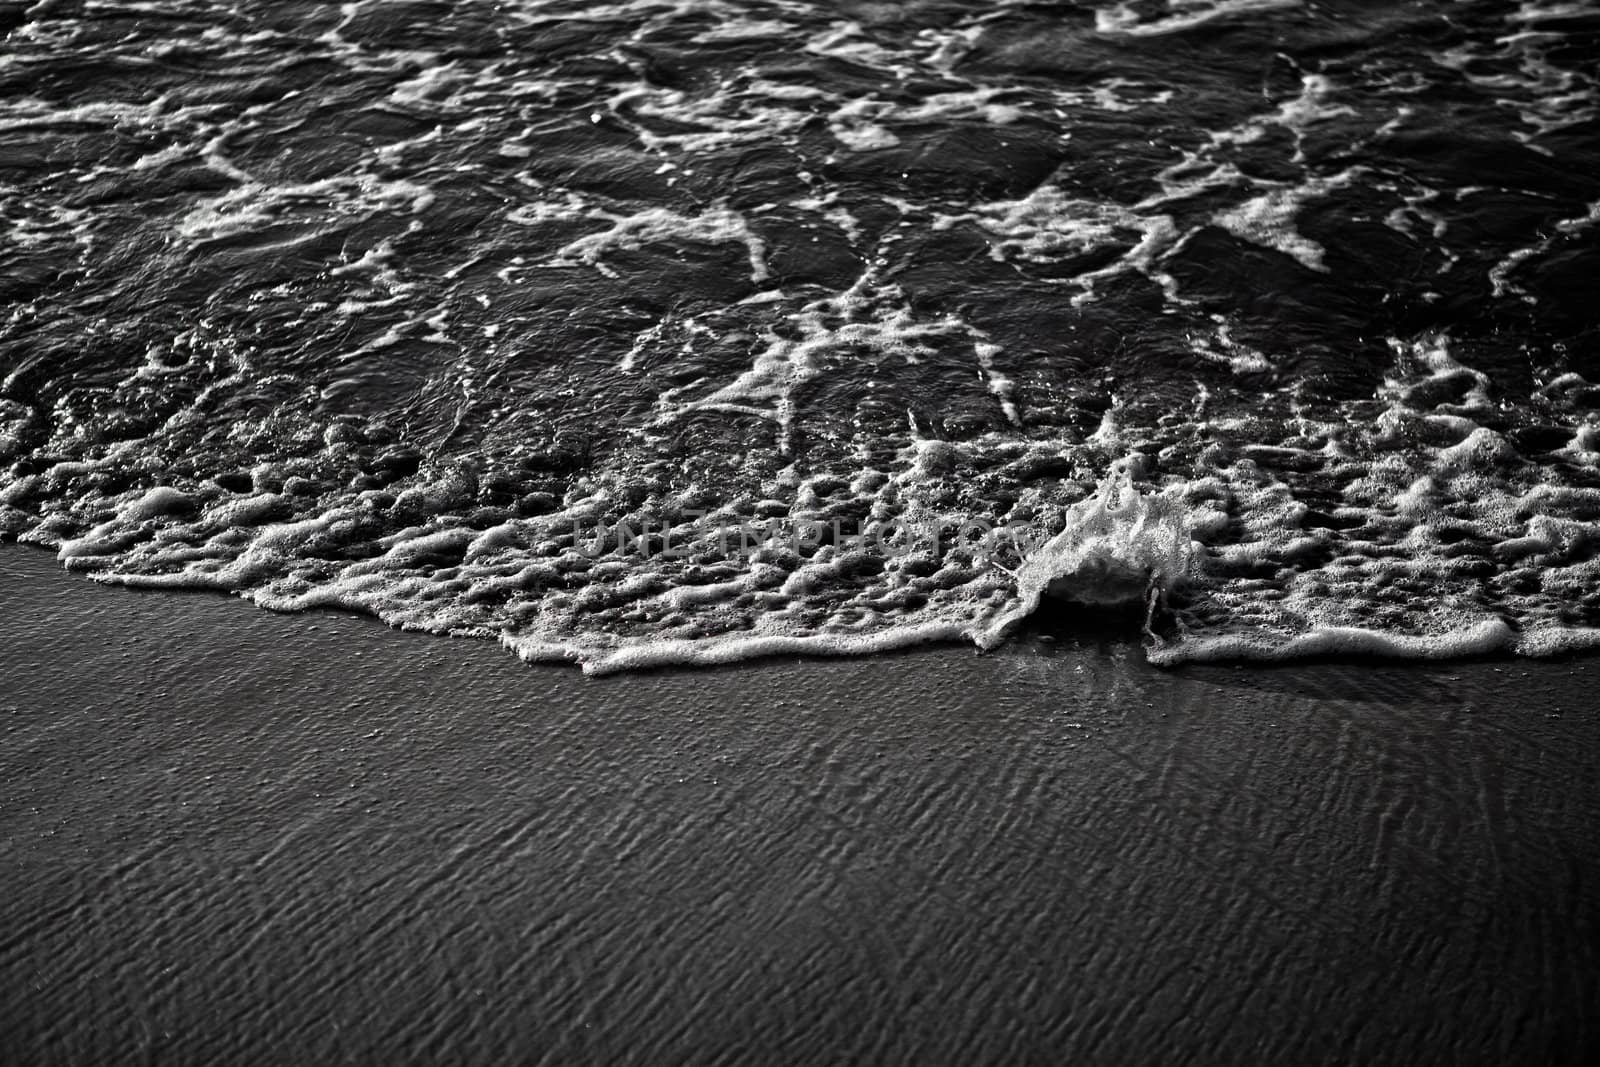 Monochrome image showing ocean water splashing onto a stone on a sandy beach